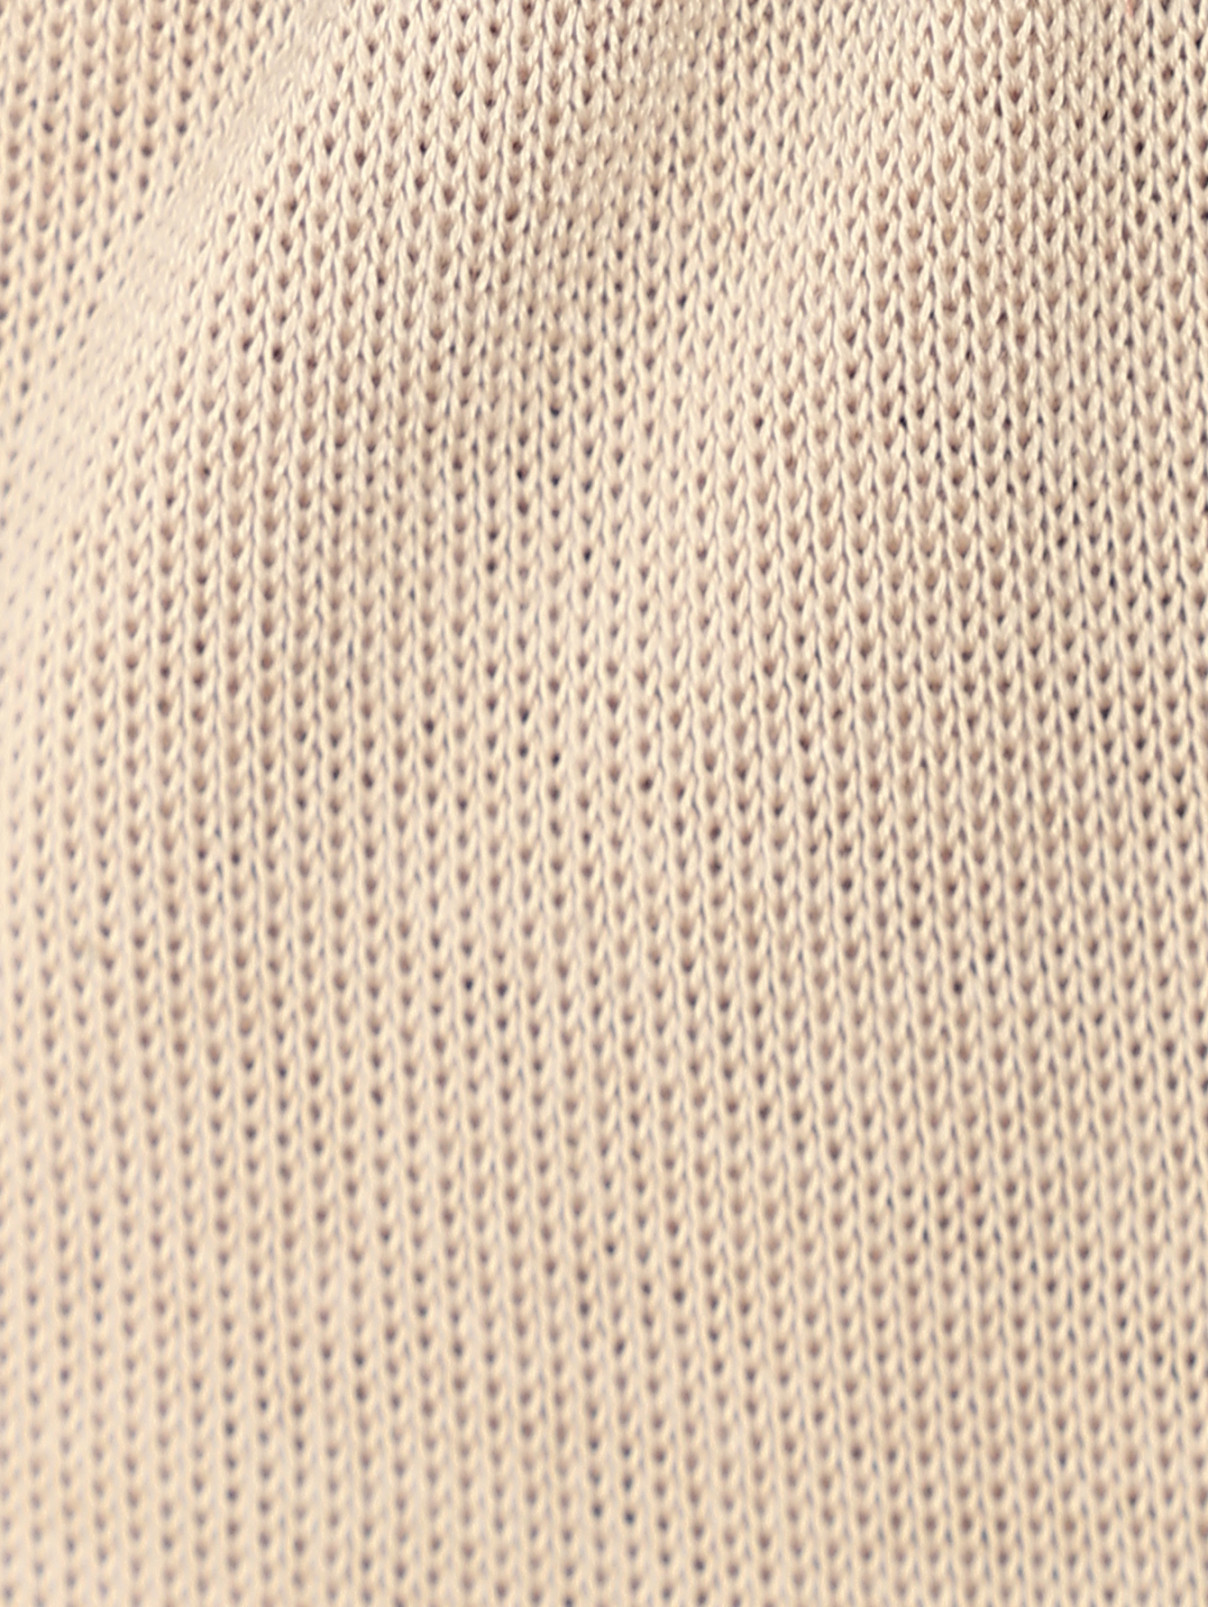 Носки из хлопка Peekaboo  –  Деталь  – Цвет:  Бежевый